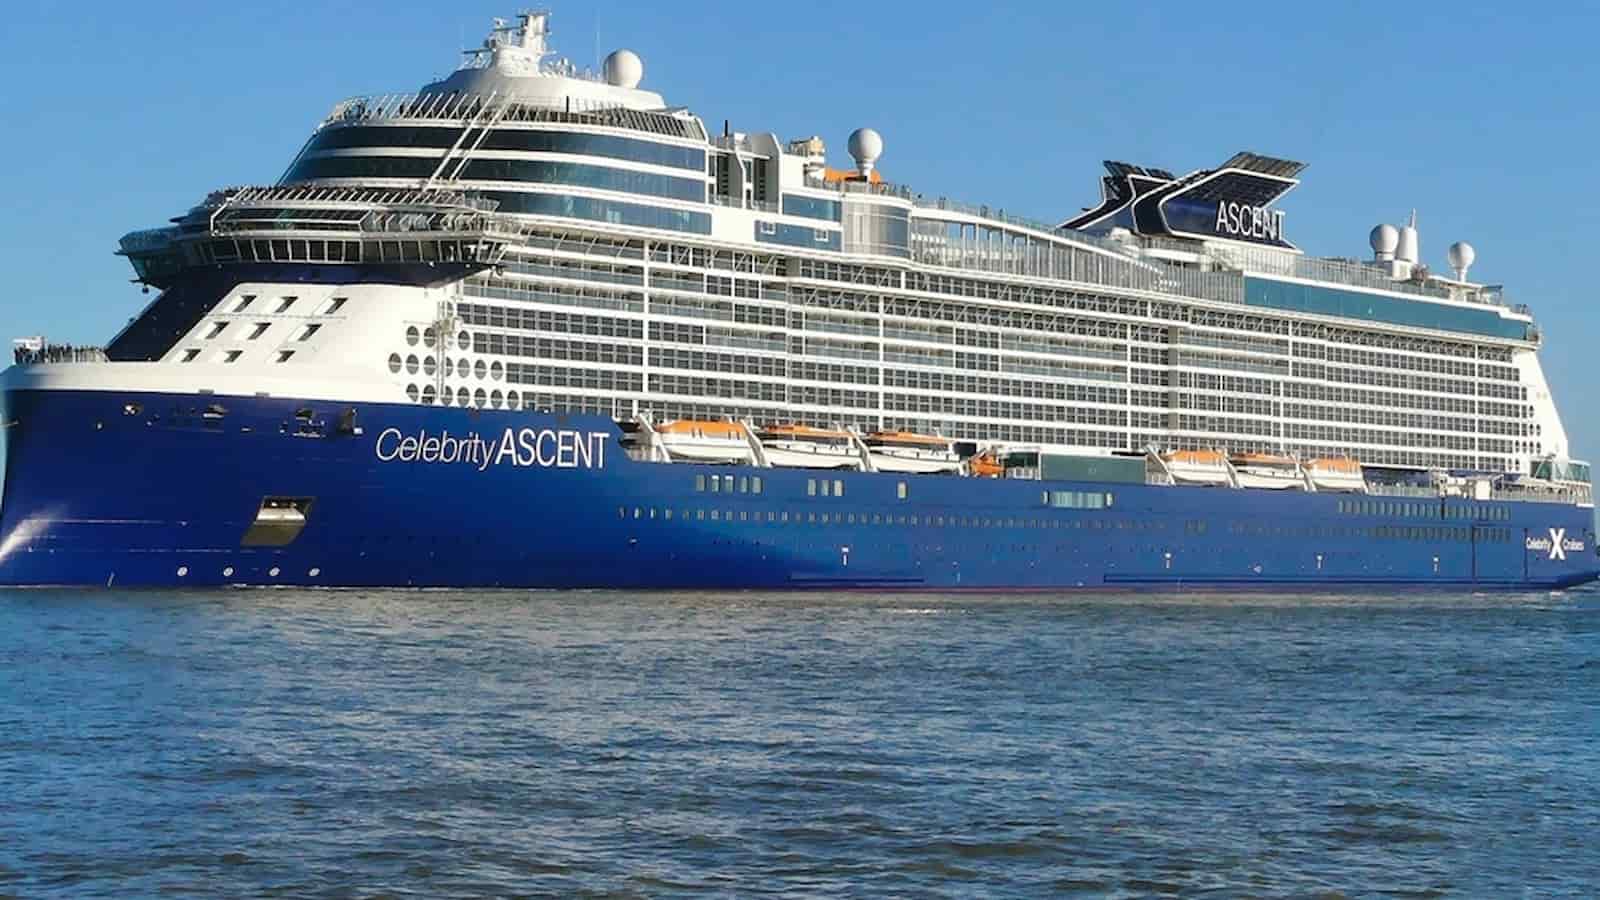 Celebrity Ascent Cruise, Celebrity Ascent Cruise review, Celebrity Ascent Cruise menu, Celebrity Ascent Cruise cabins